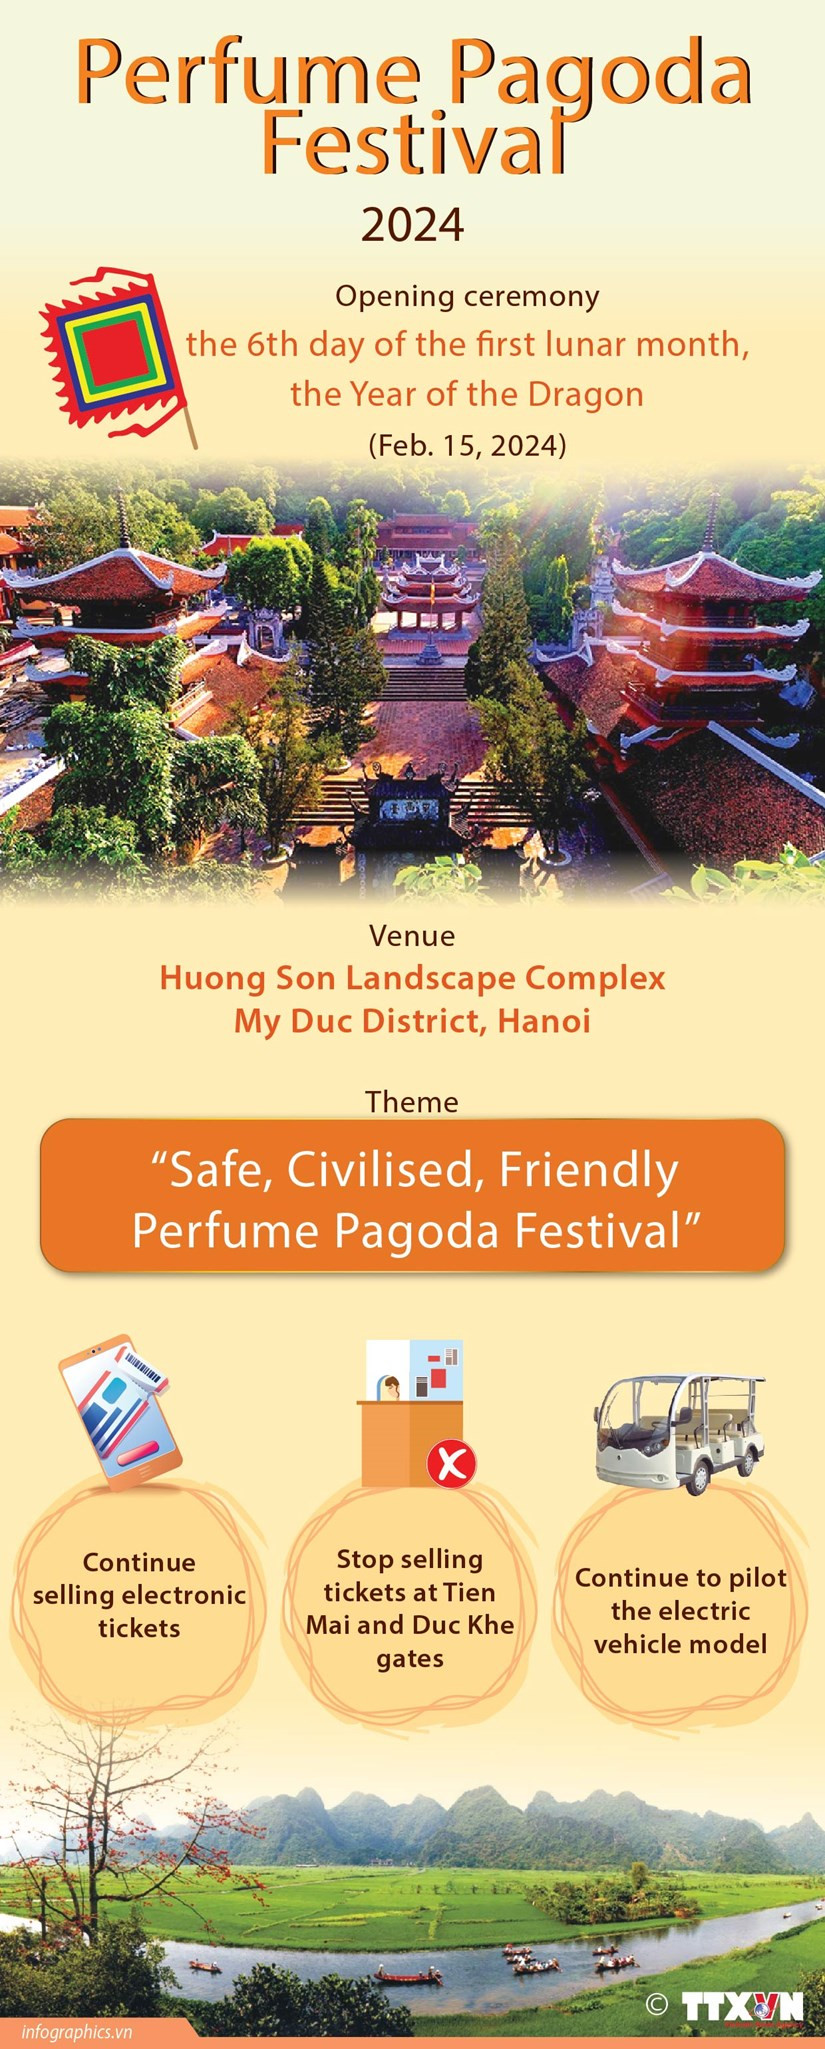 Perfume Pagoda Festival 2024 hinh anh 1